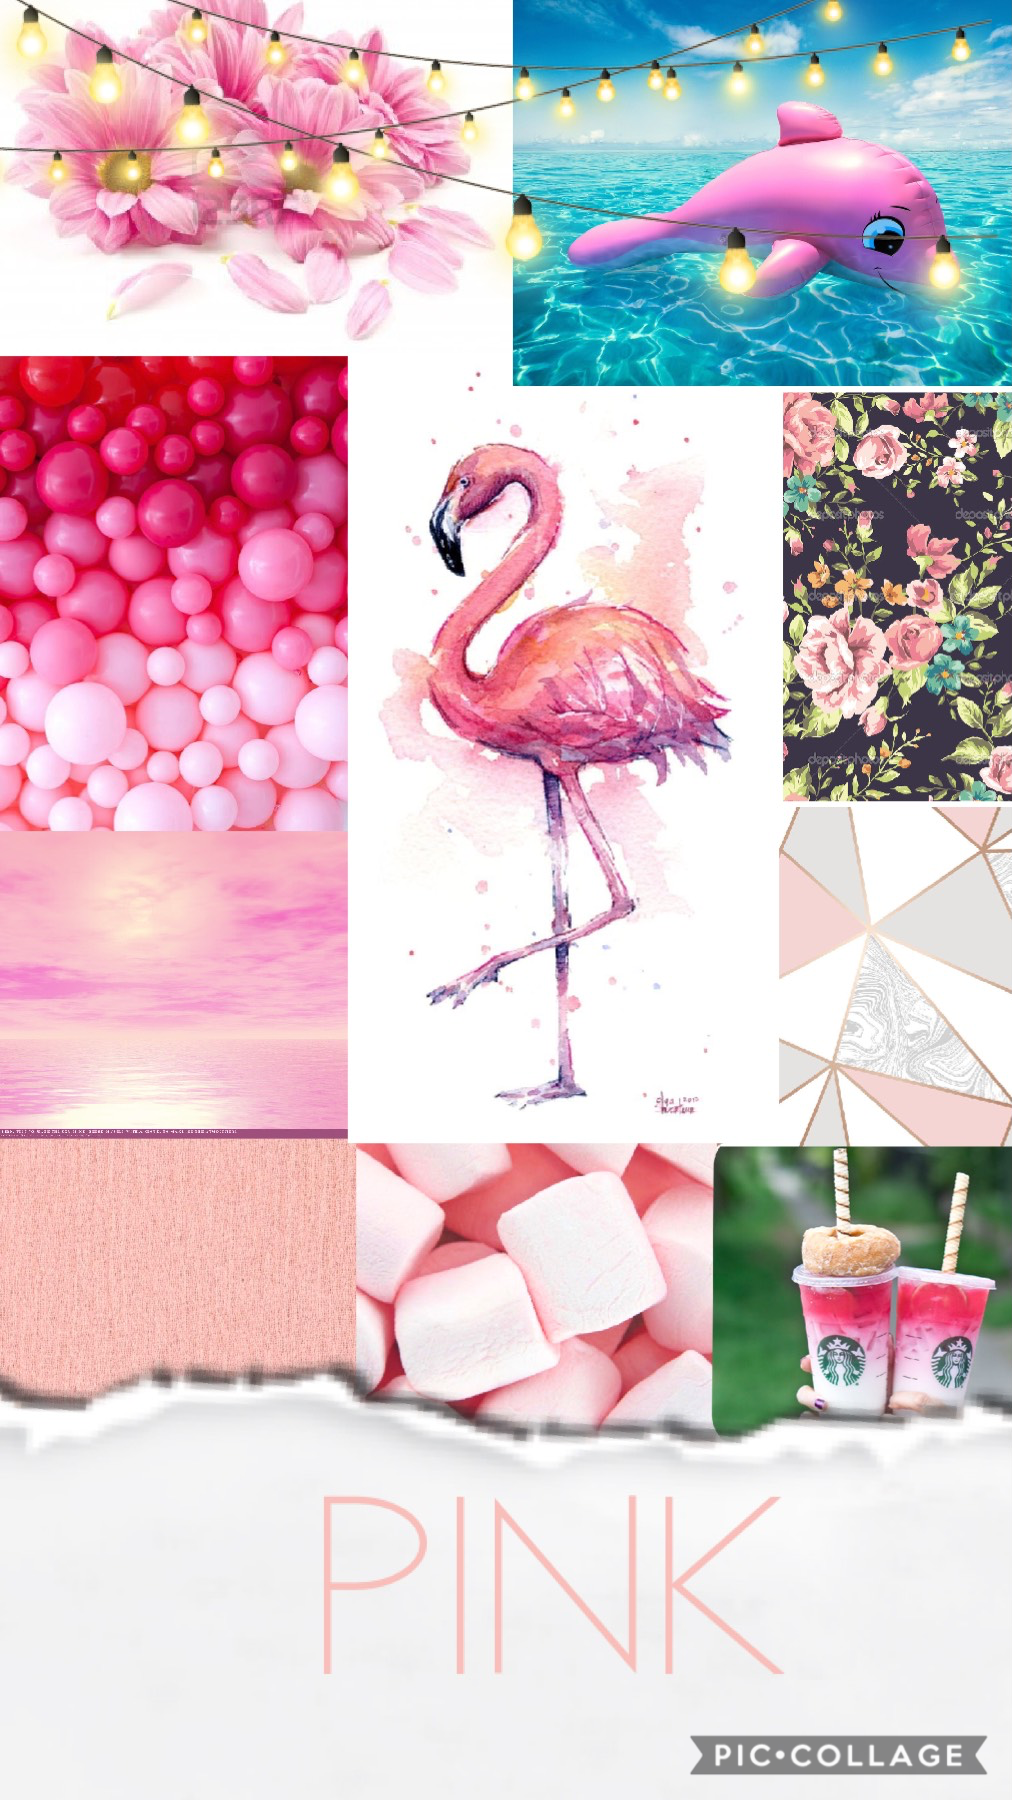 💗💗tappity 💗💗
Pink pink pink